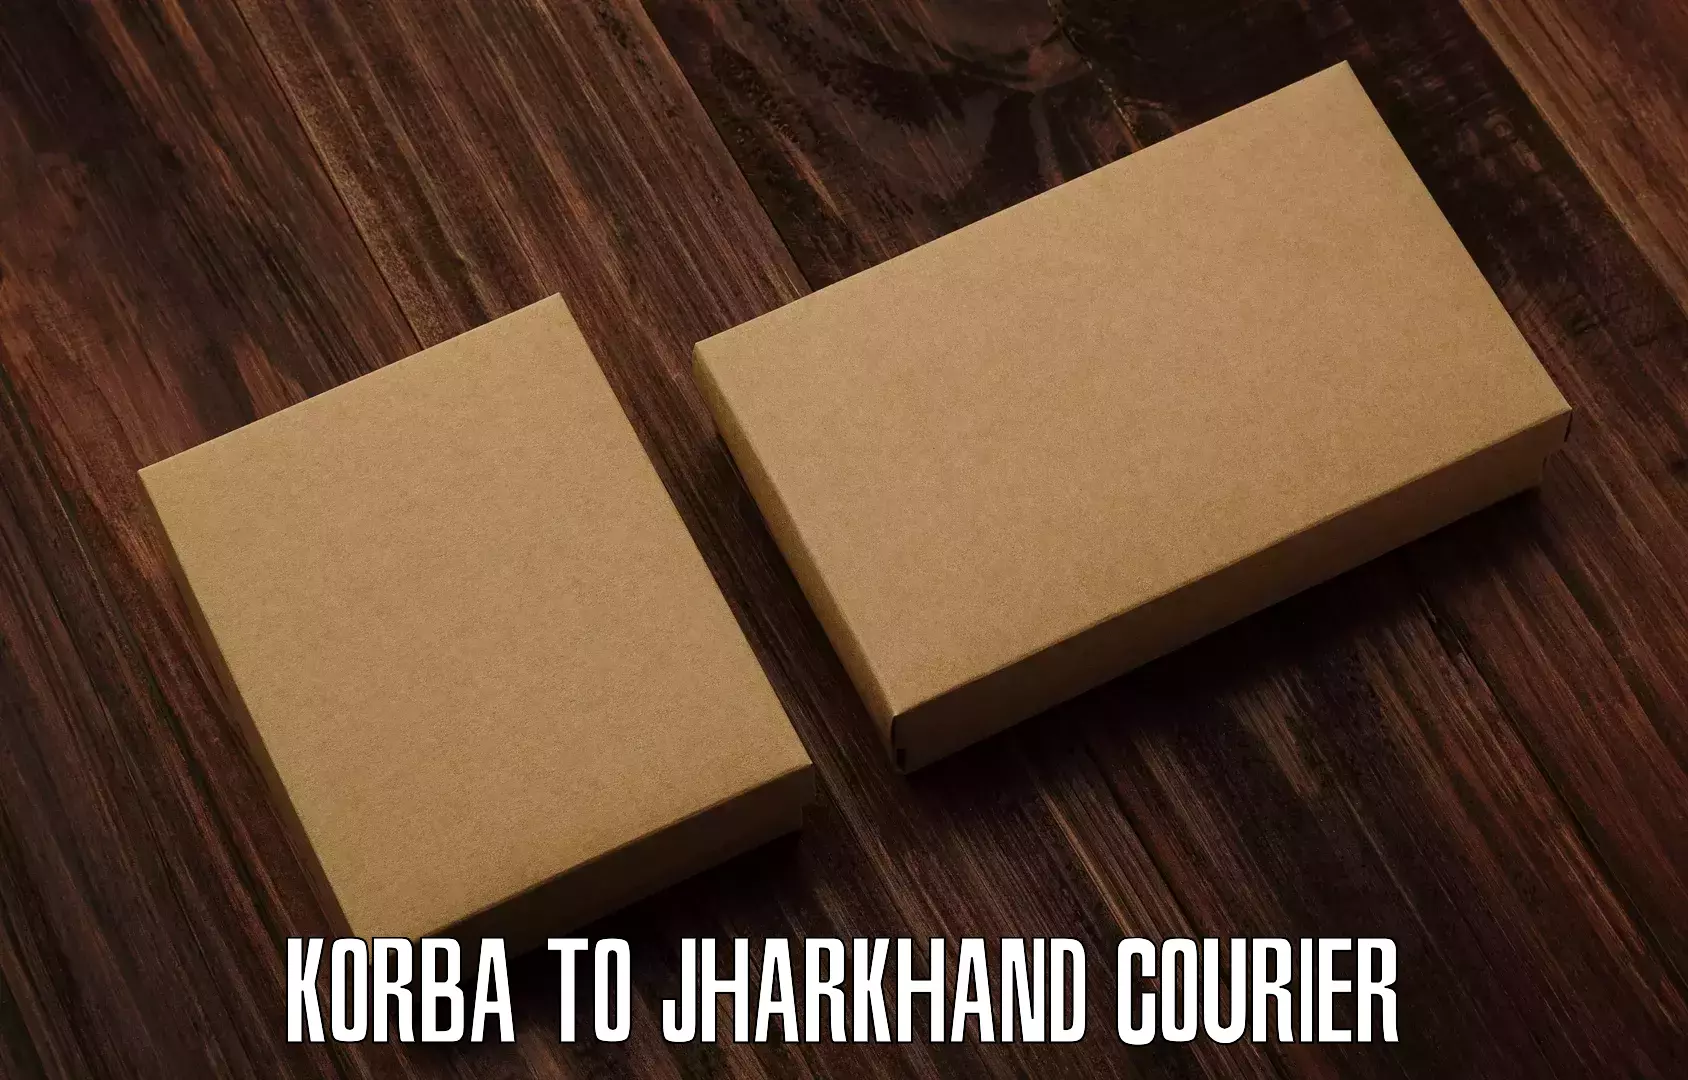 Courier service comparison Korba to Ranchi